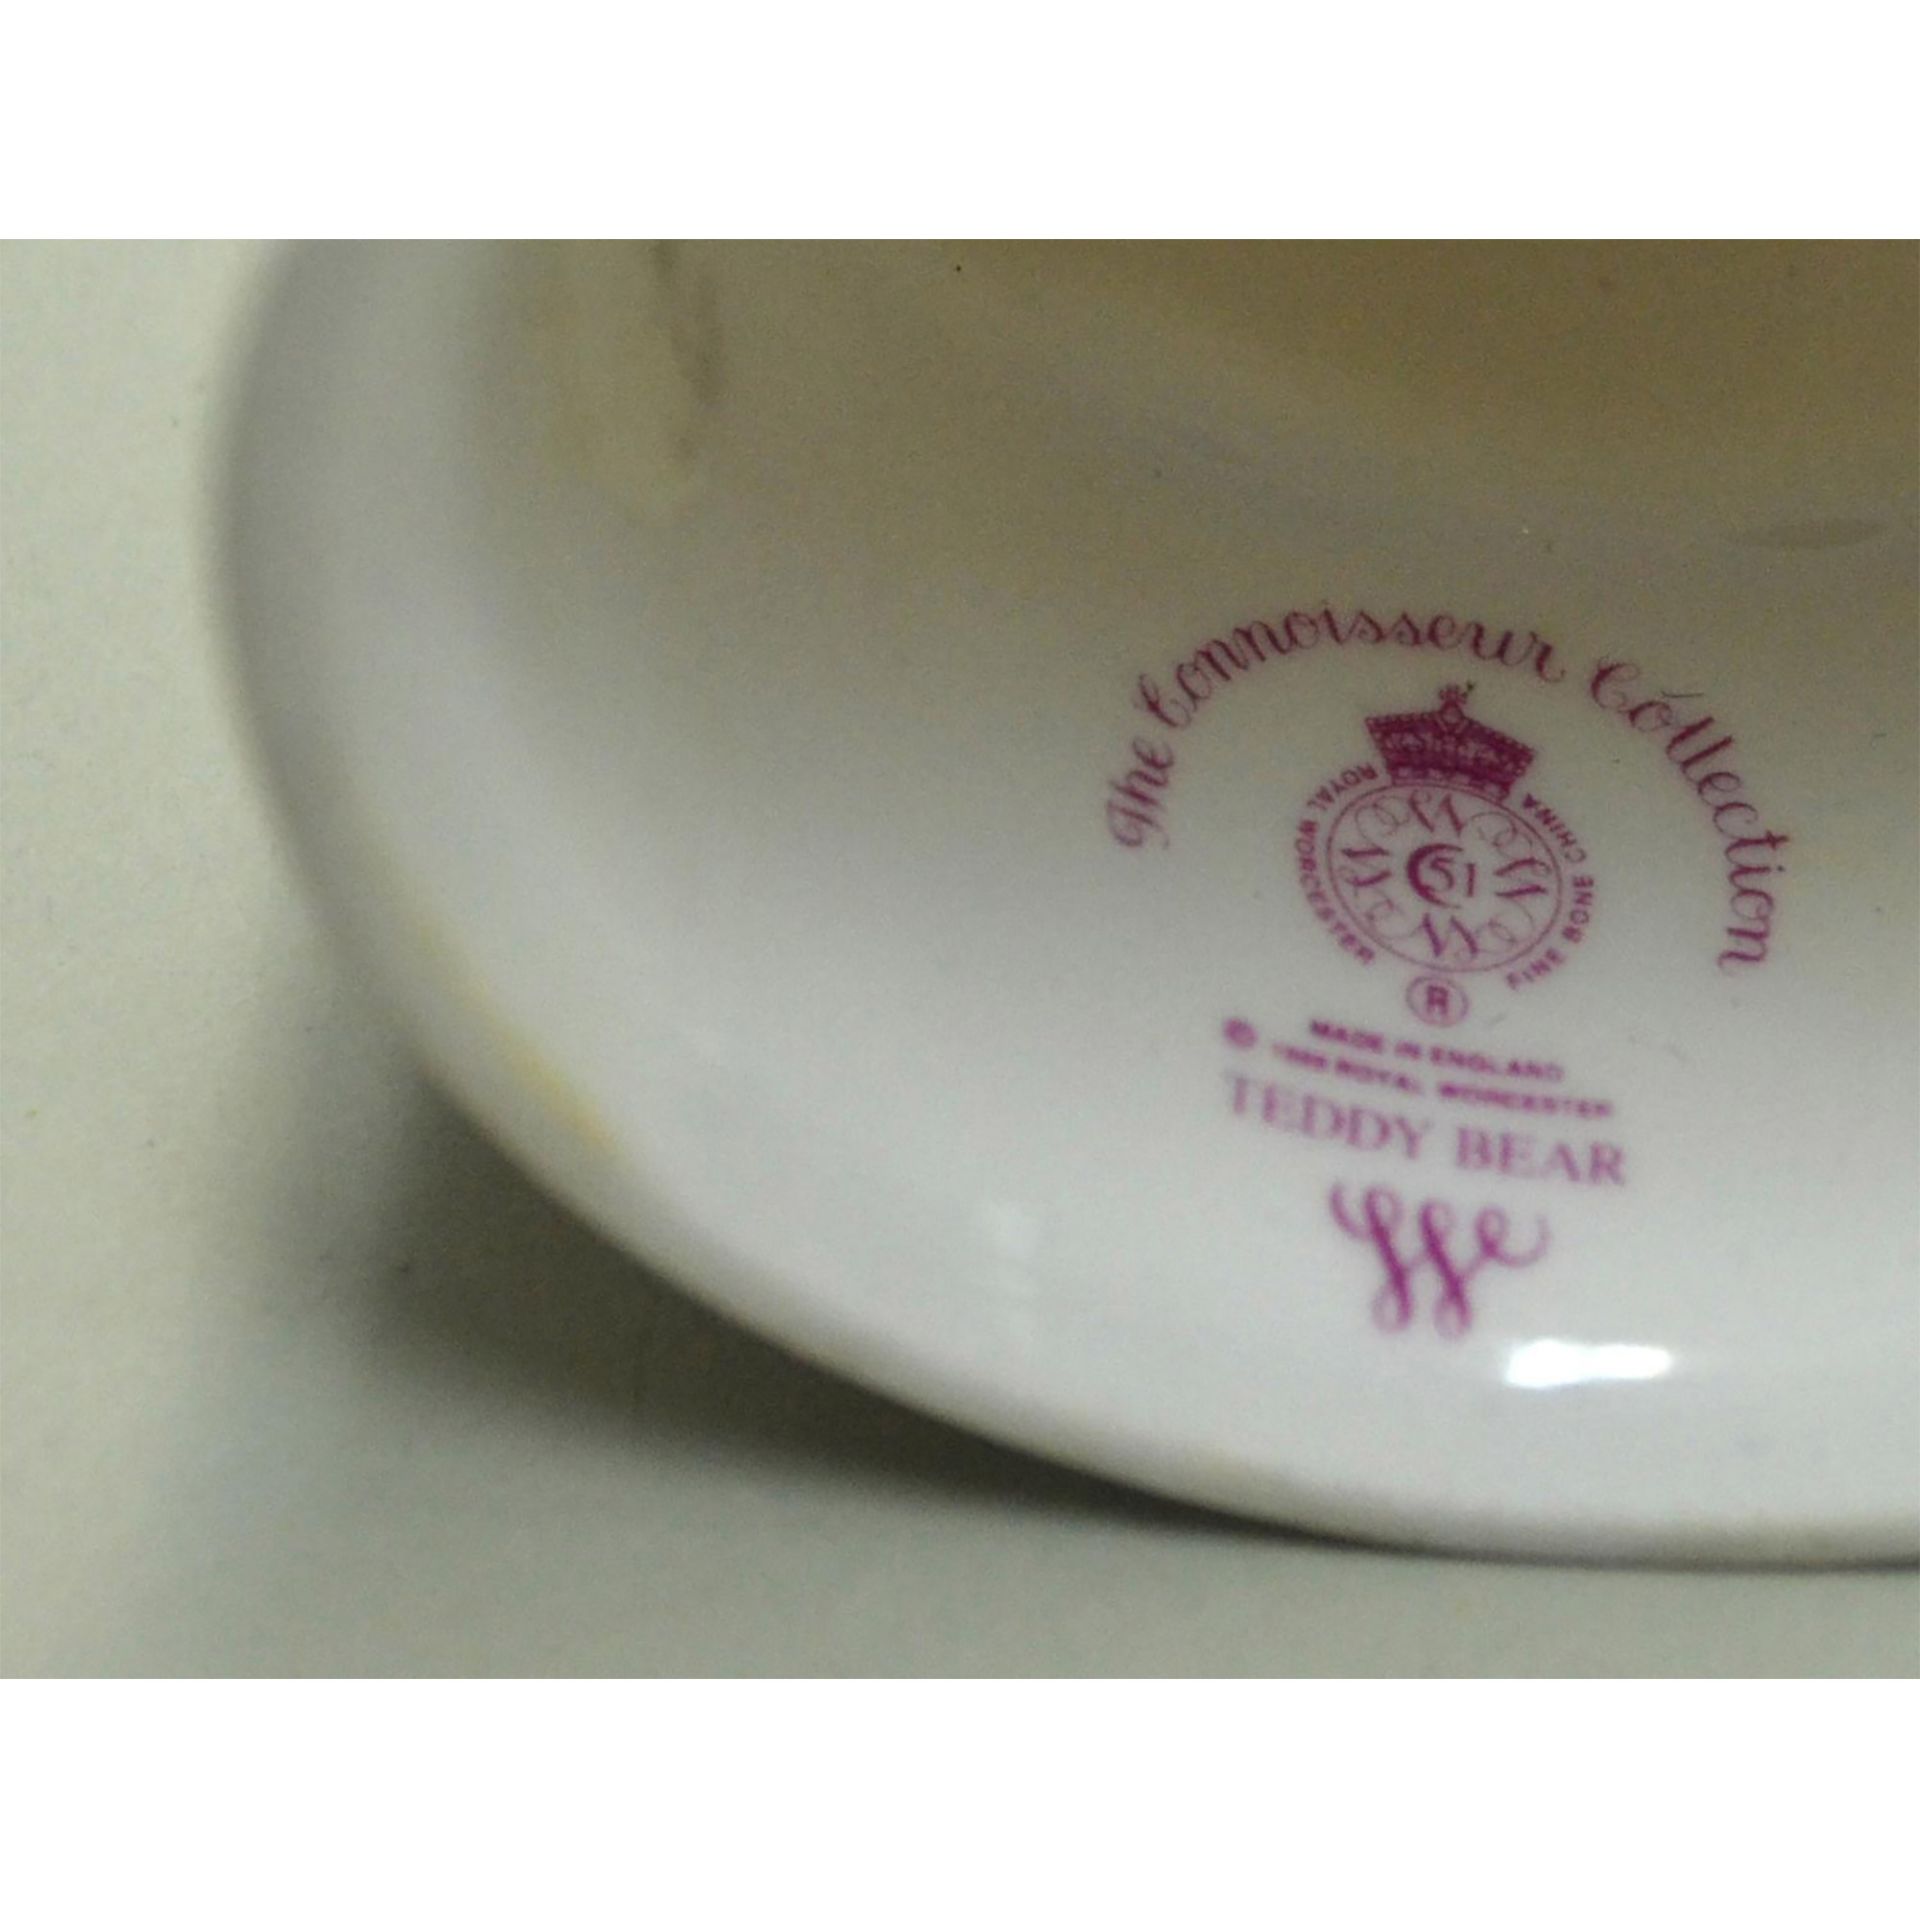 Royal Worcester Porcelain Teddy Bear Candle Snuffer - Bild 5 aus 5